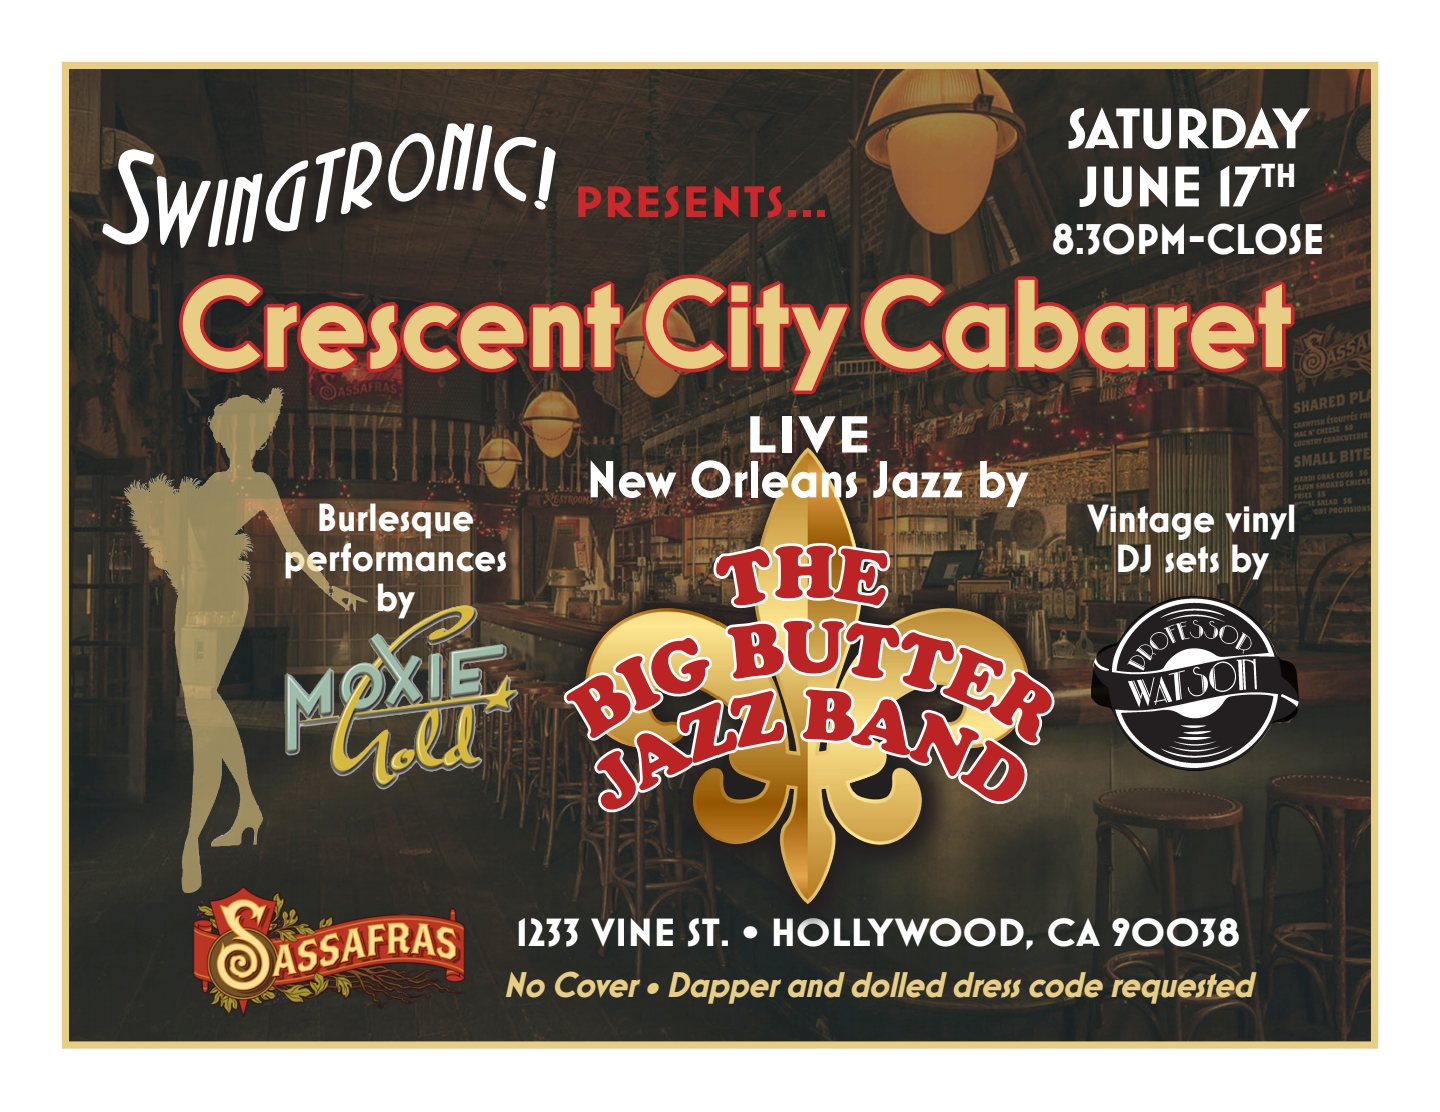 Swingtronic presents Crescent City Cabaret at Sassafras